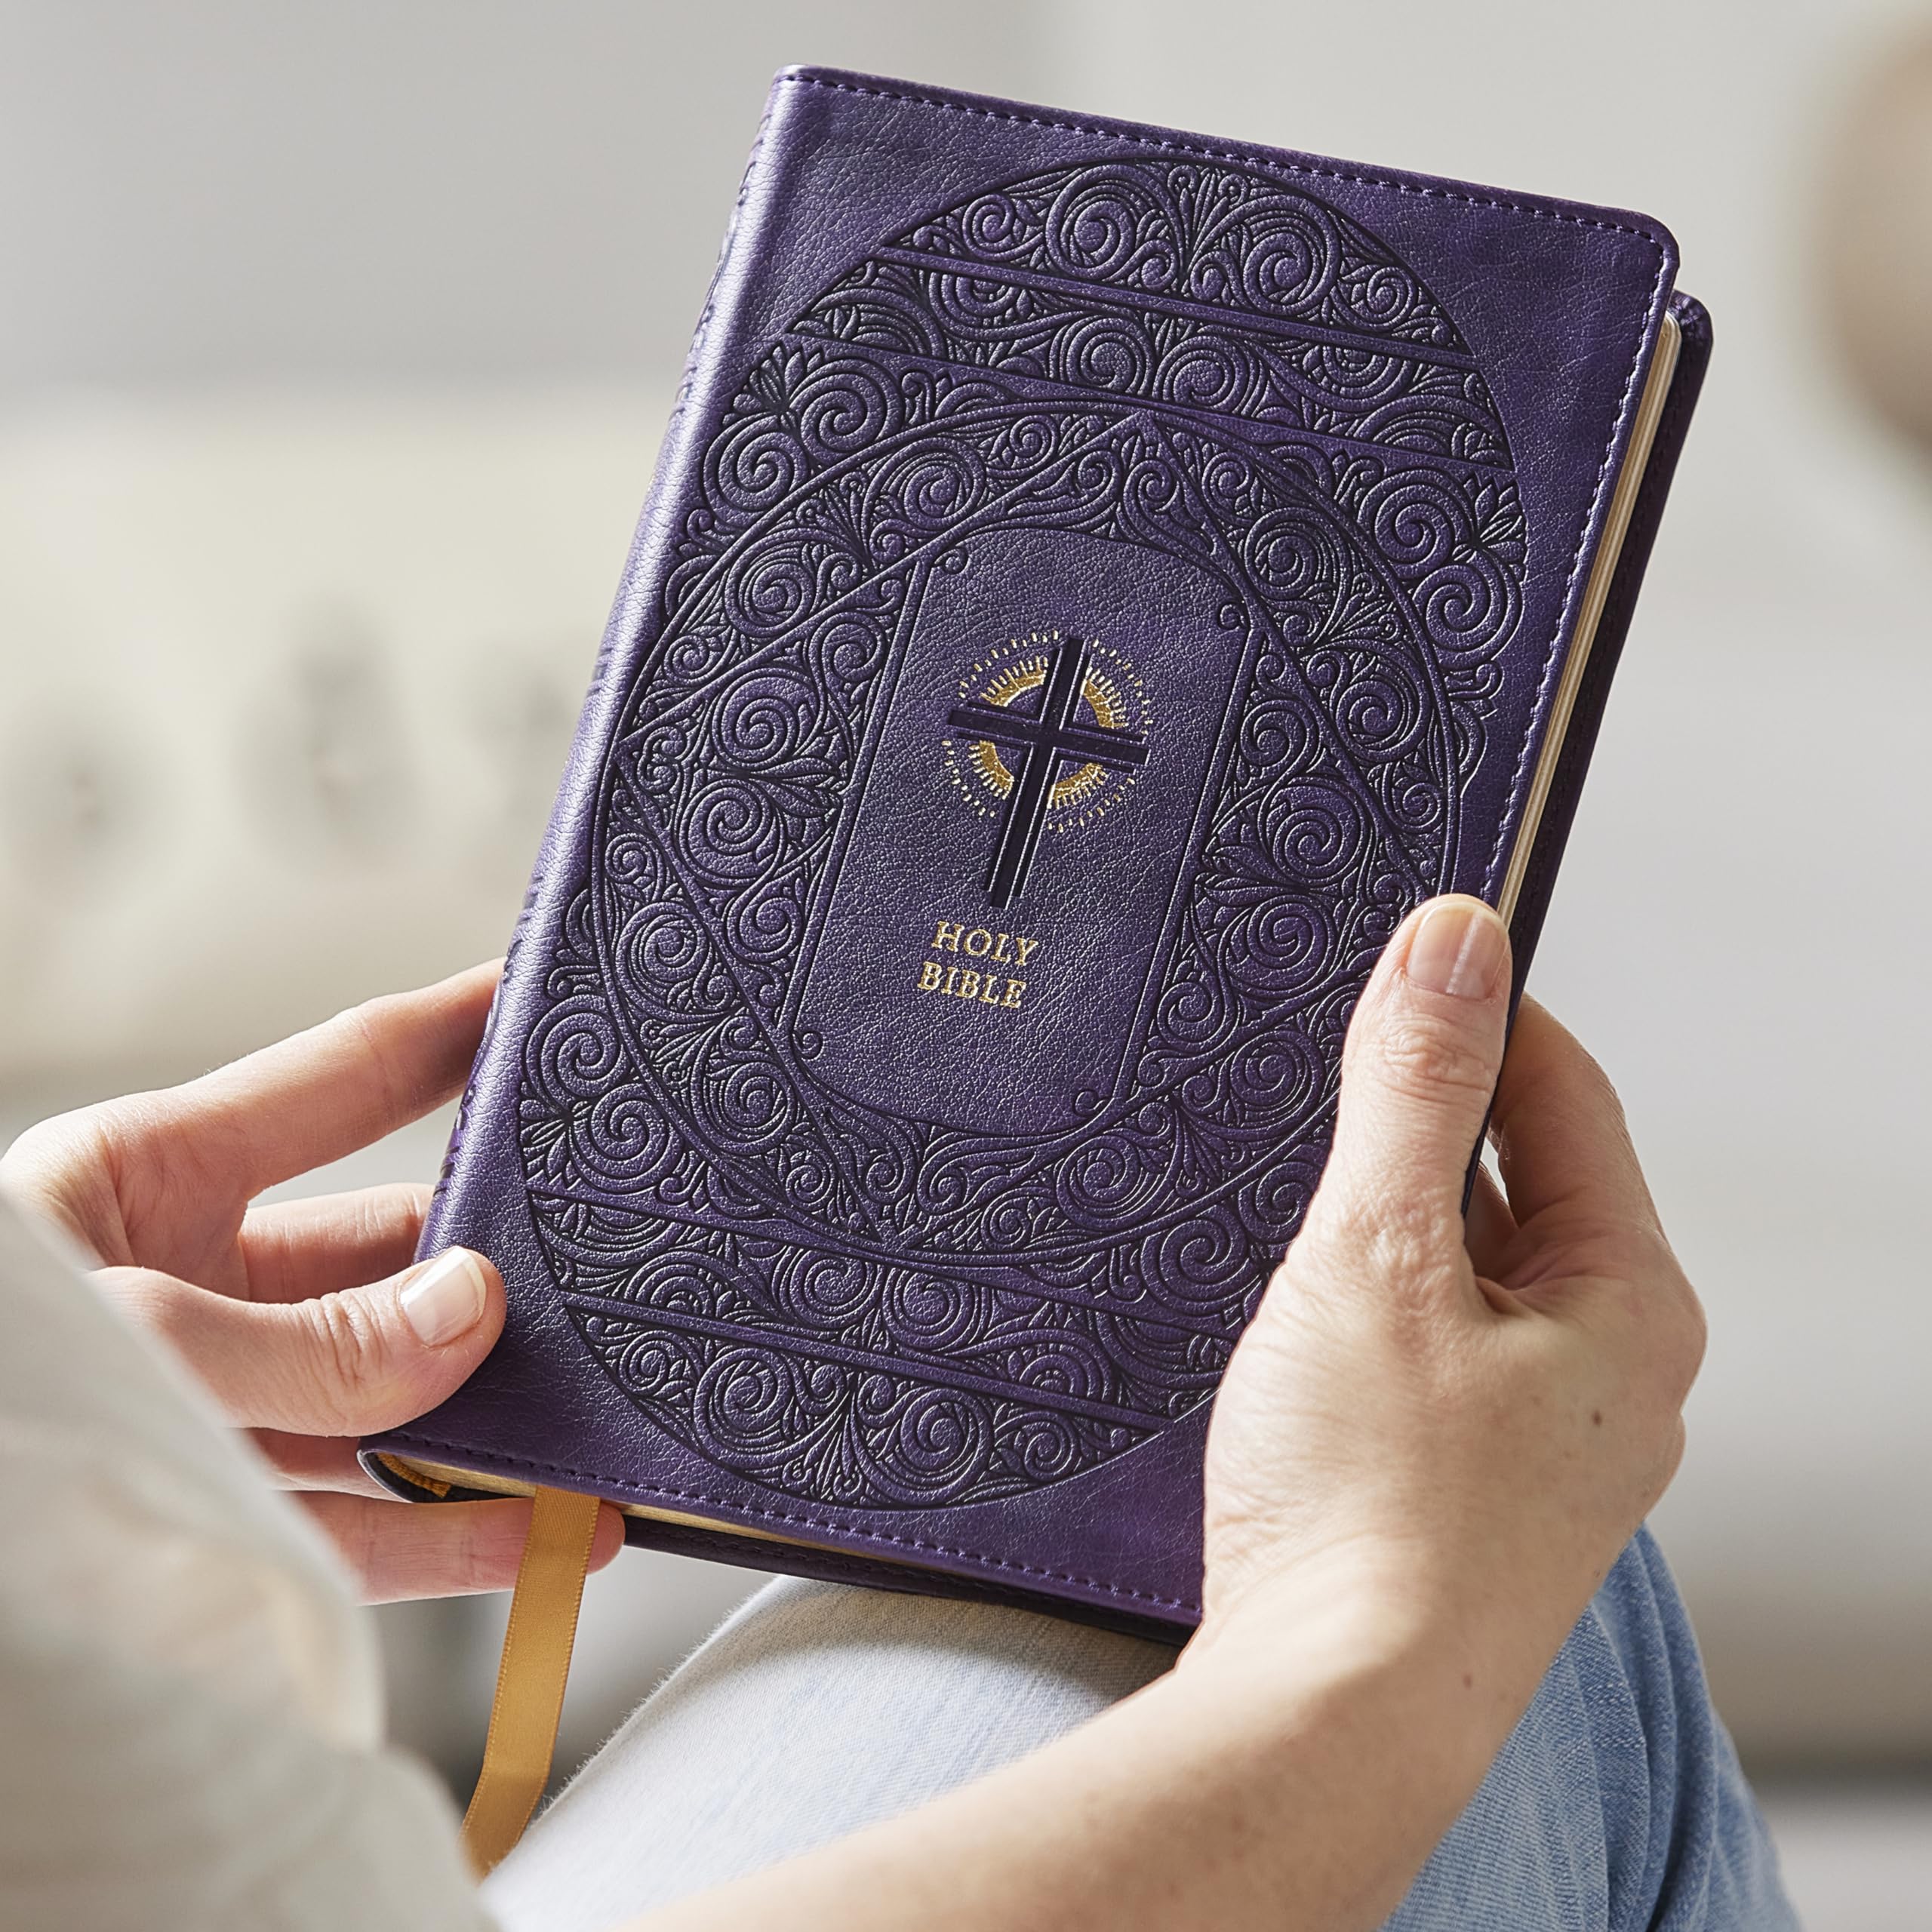 NRSVCE Sacraments of Initiation Catholic Bible, Purple Leathersoft, Comfort Print